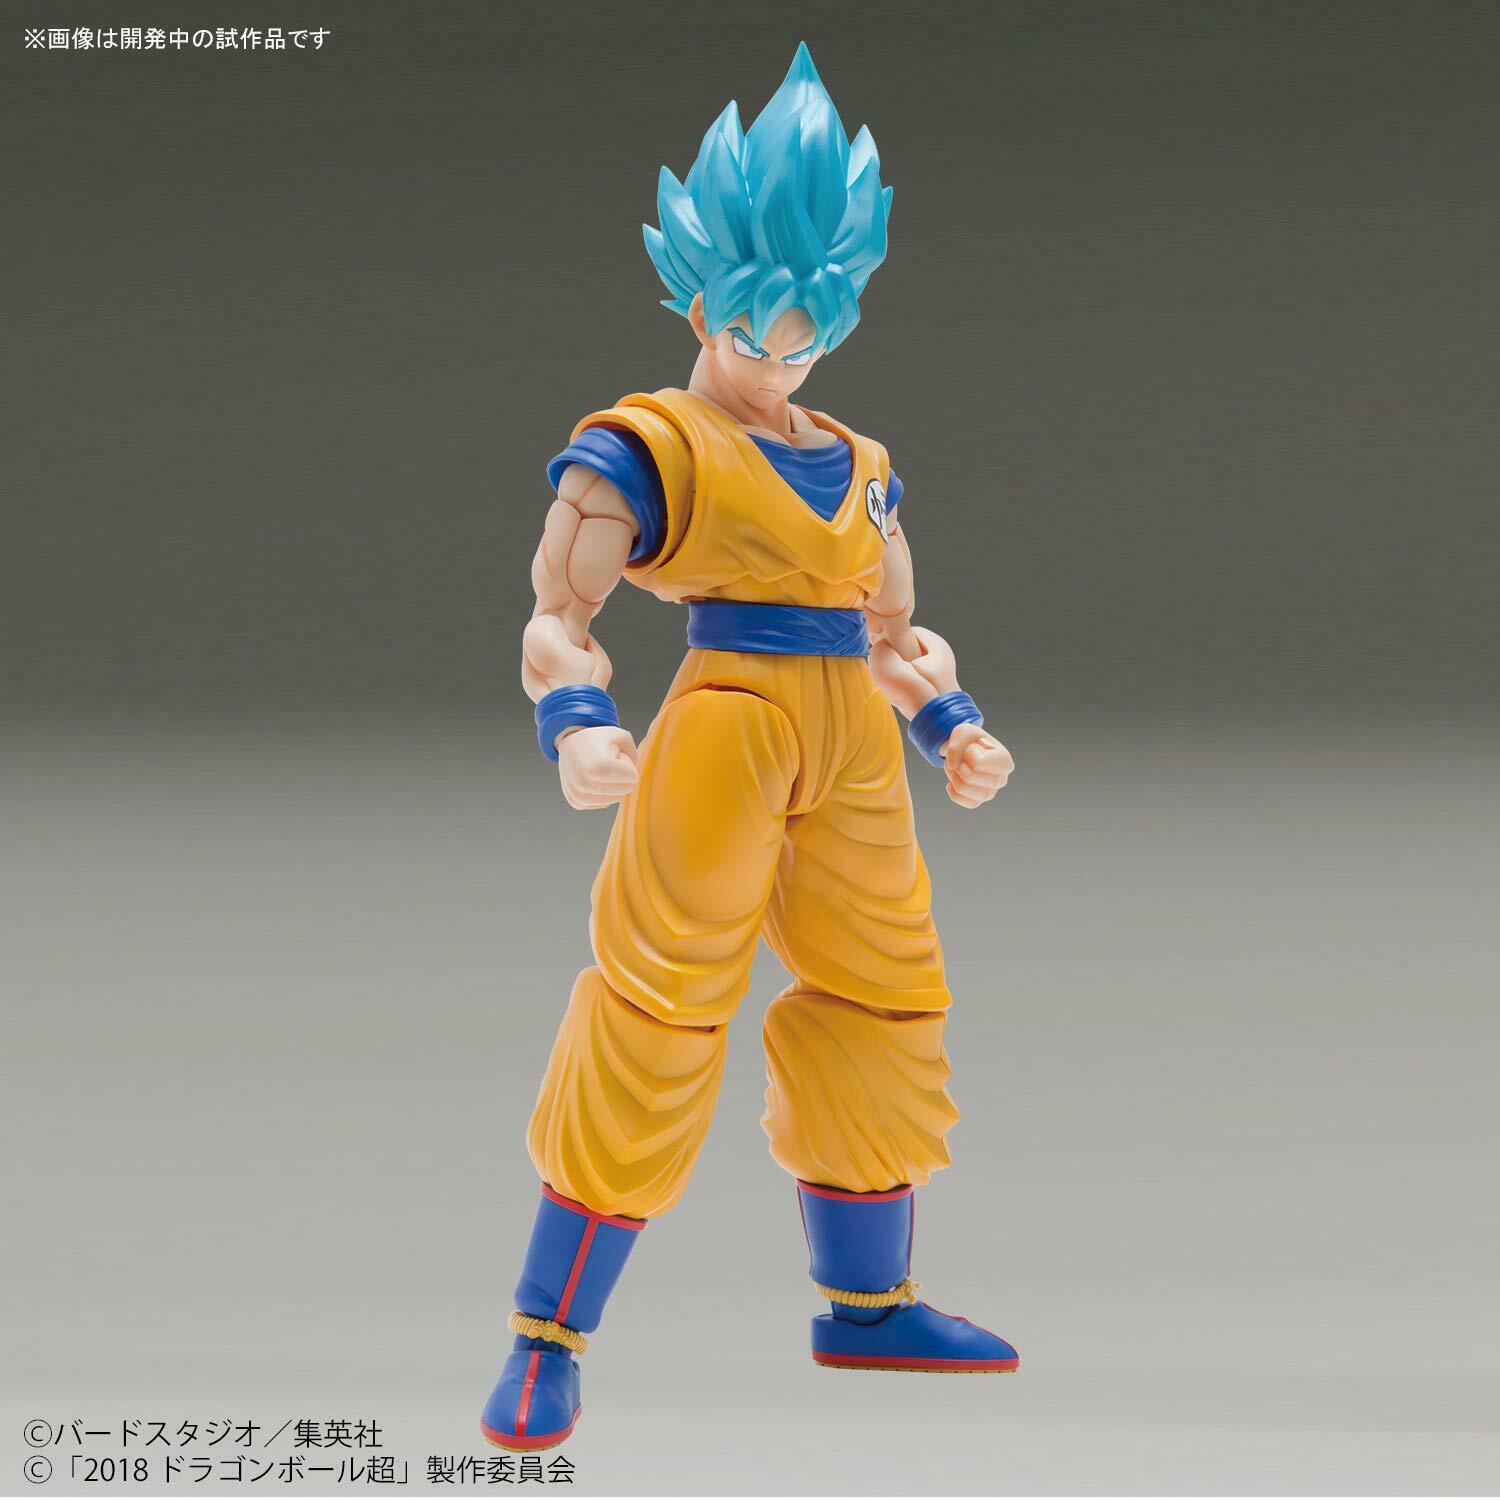 Figure-rise Standard - Super Saiyan God Super Saiyan Goku (Special Color)